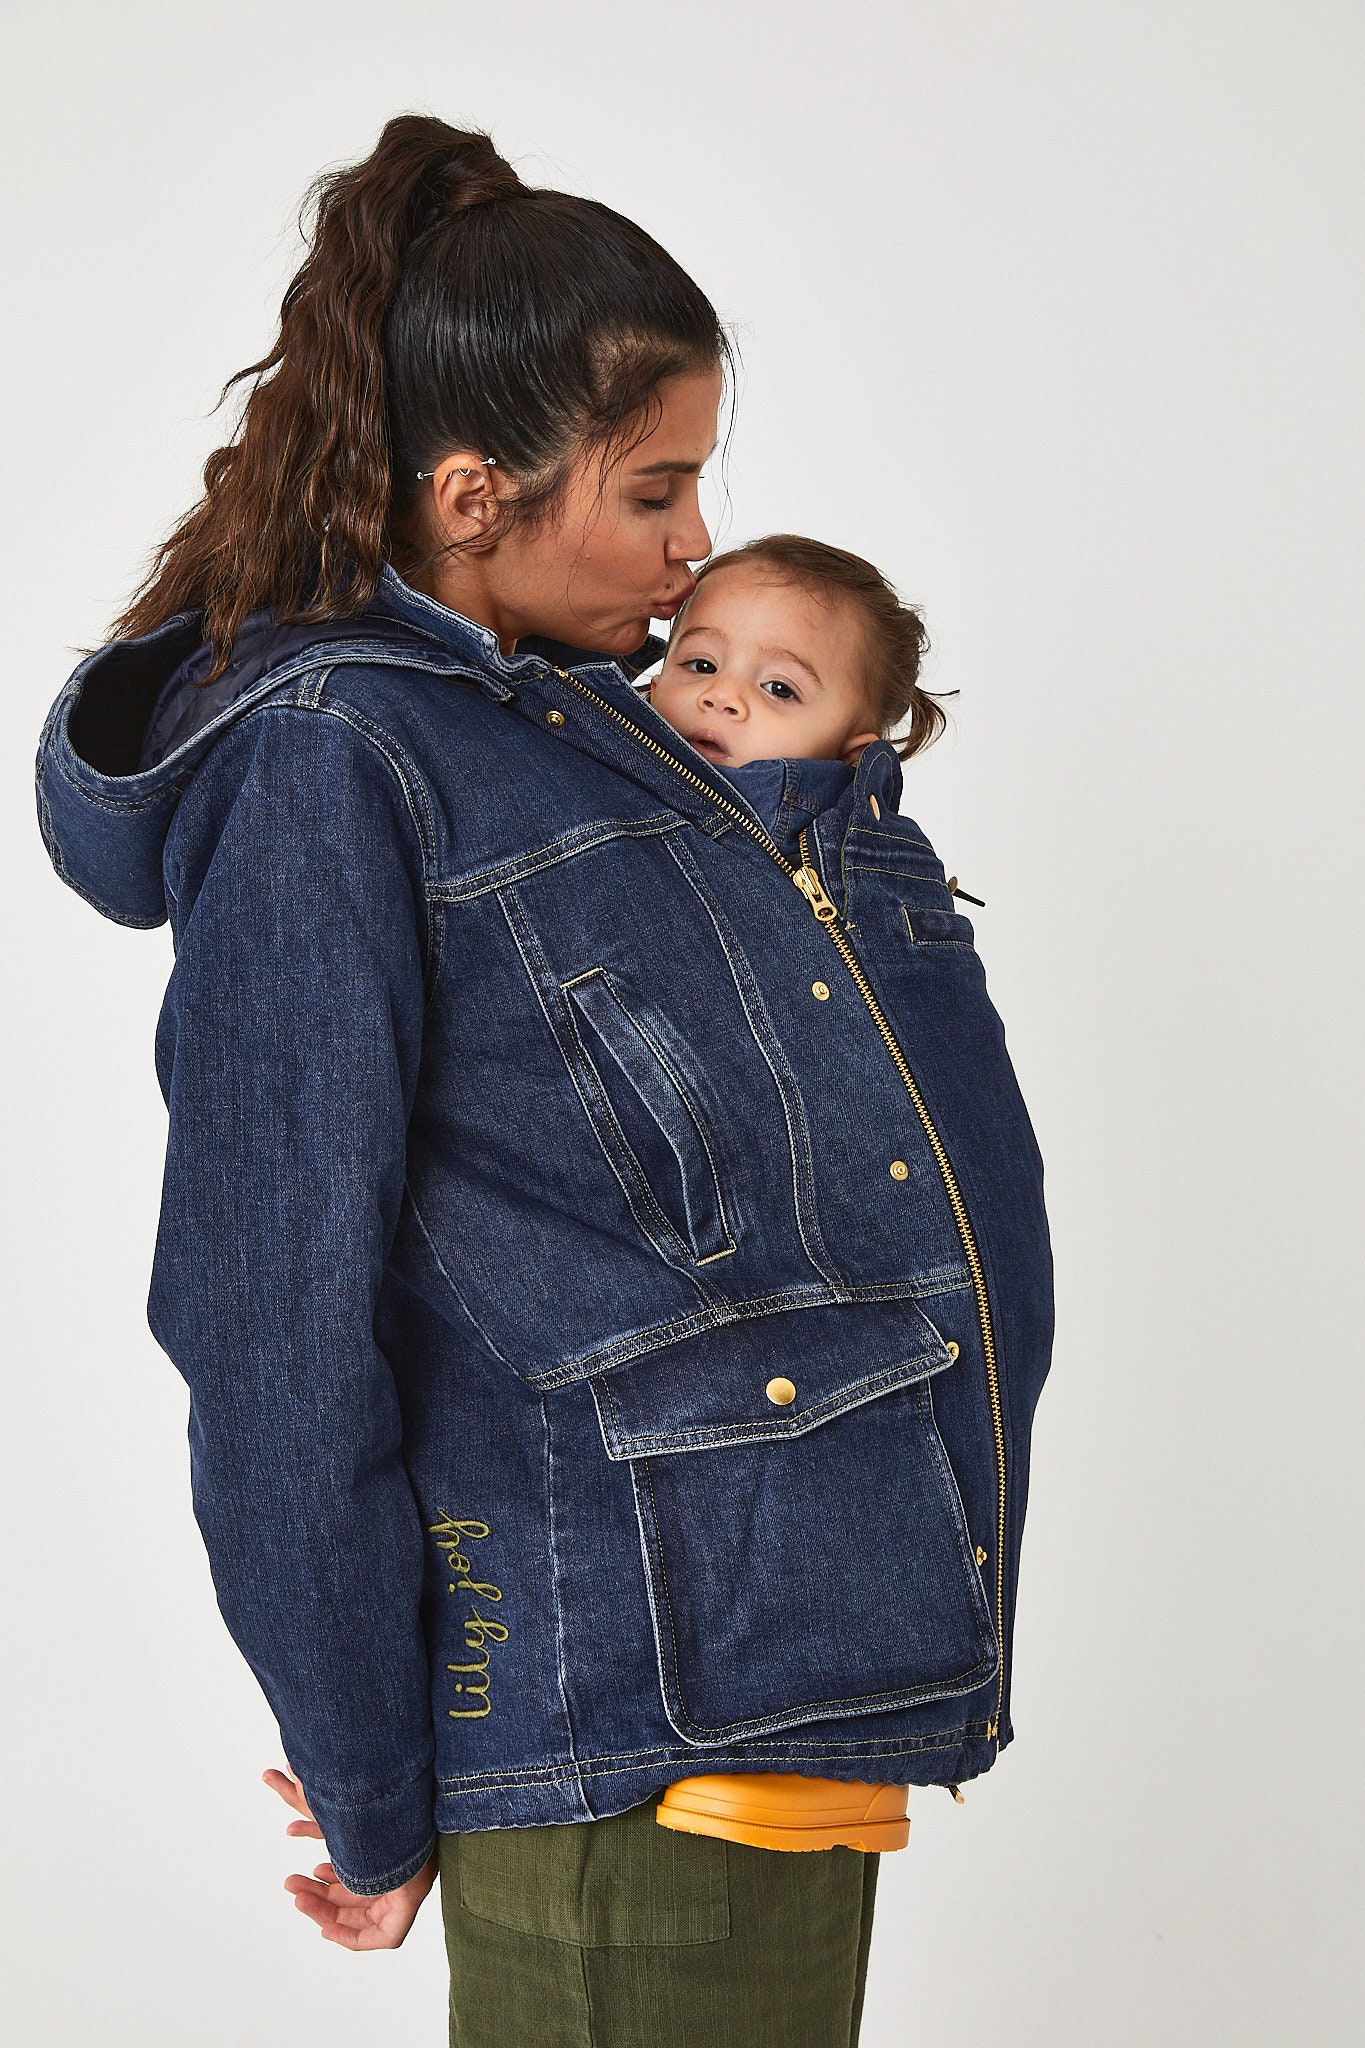 NEW LUNA for MEN Dads Babywearing Babycarrying Fleece Jacket Kangaroo  Carrier, Carrying Coat Graphite/black NP01/A -  Canada